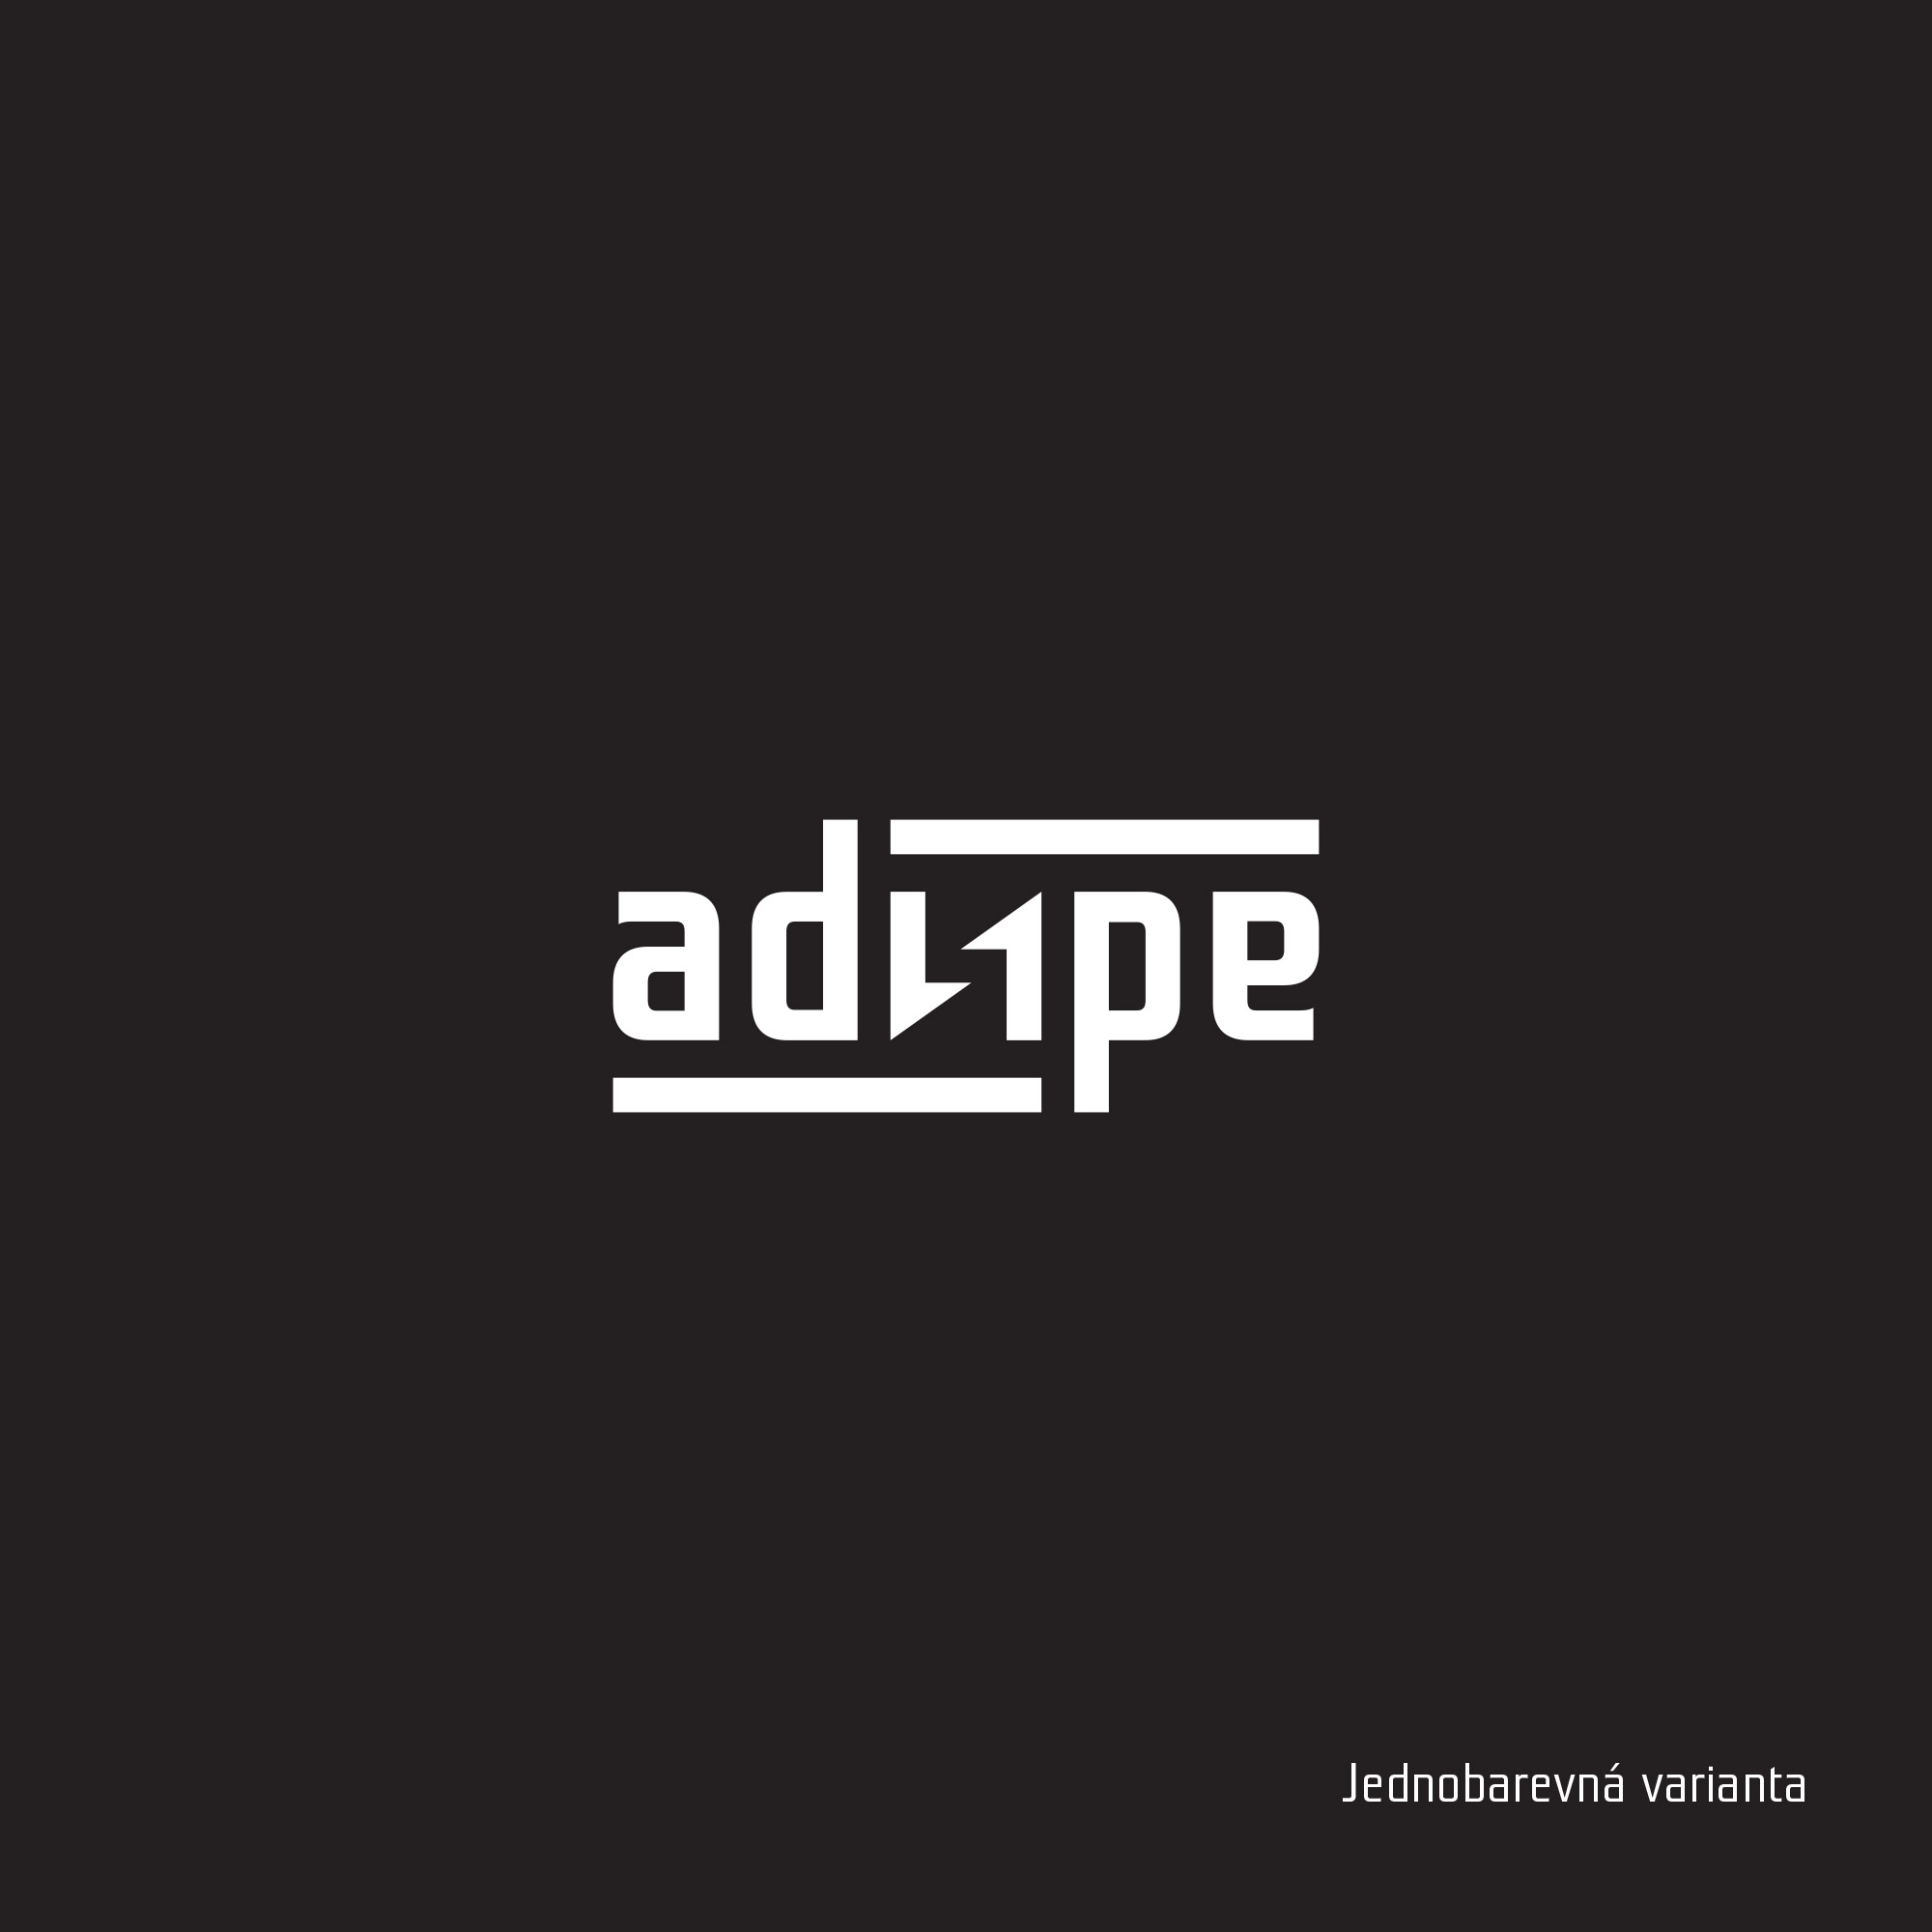 advipe